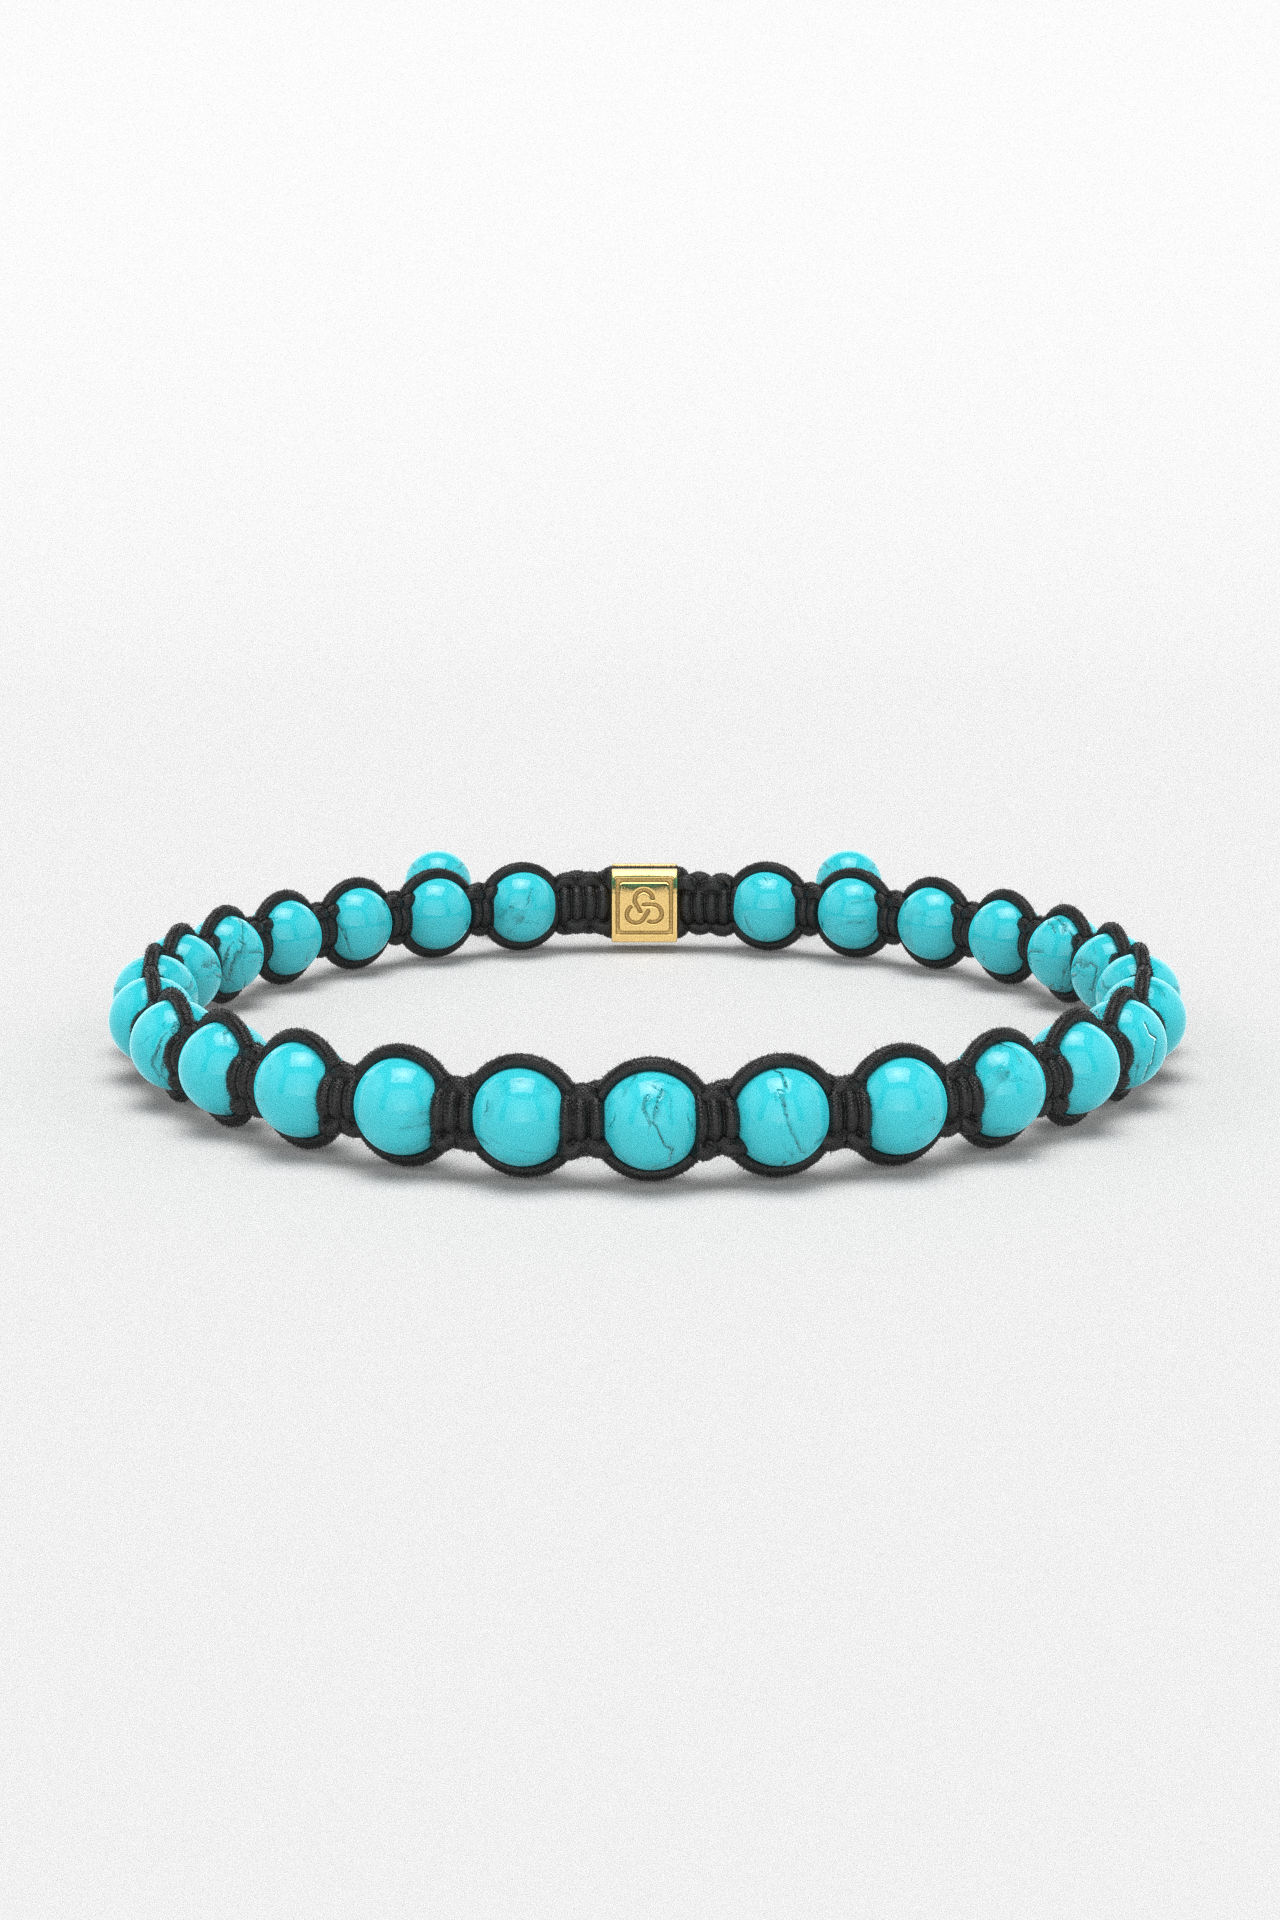 Turquoise Bracelet 6mm | Knot (copia)